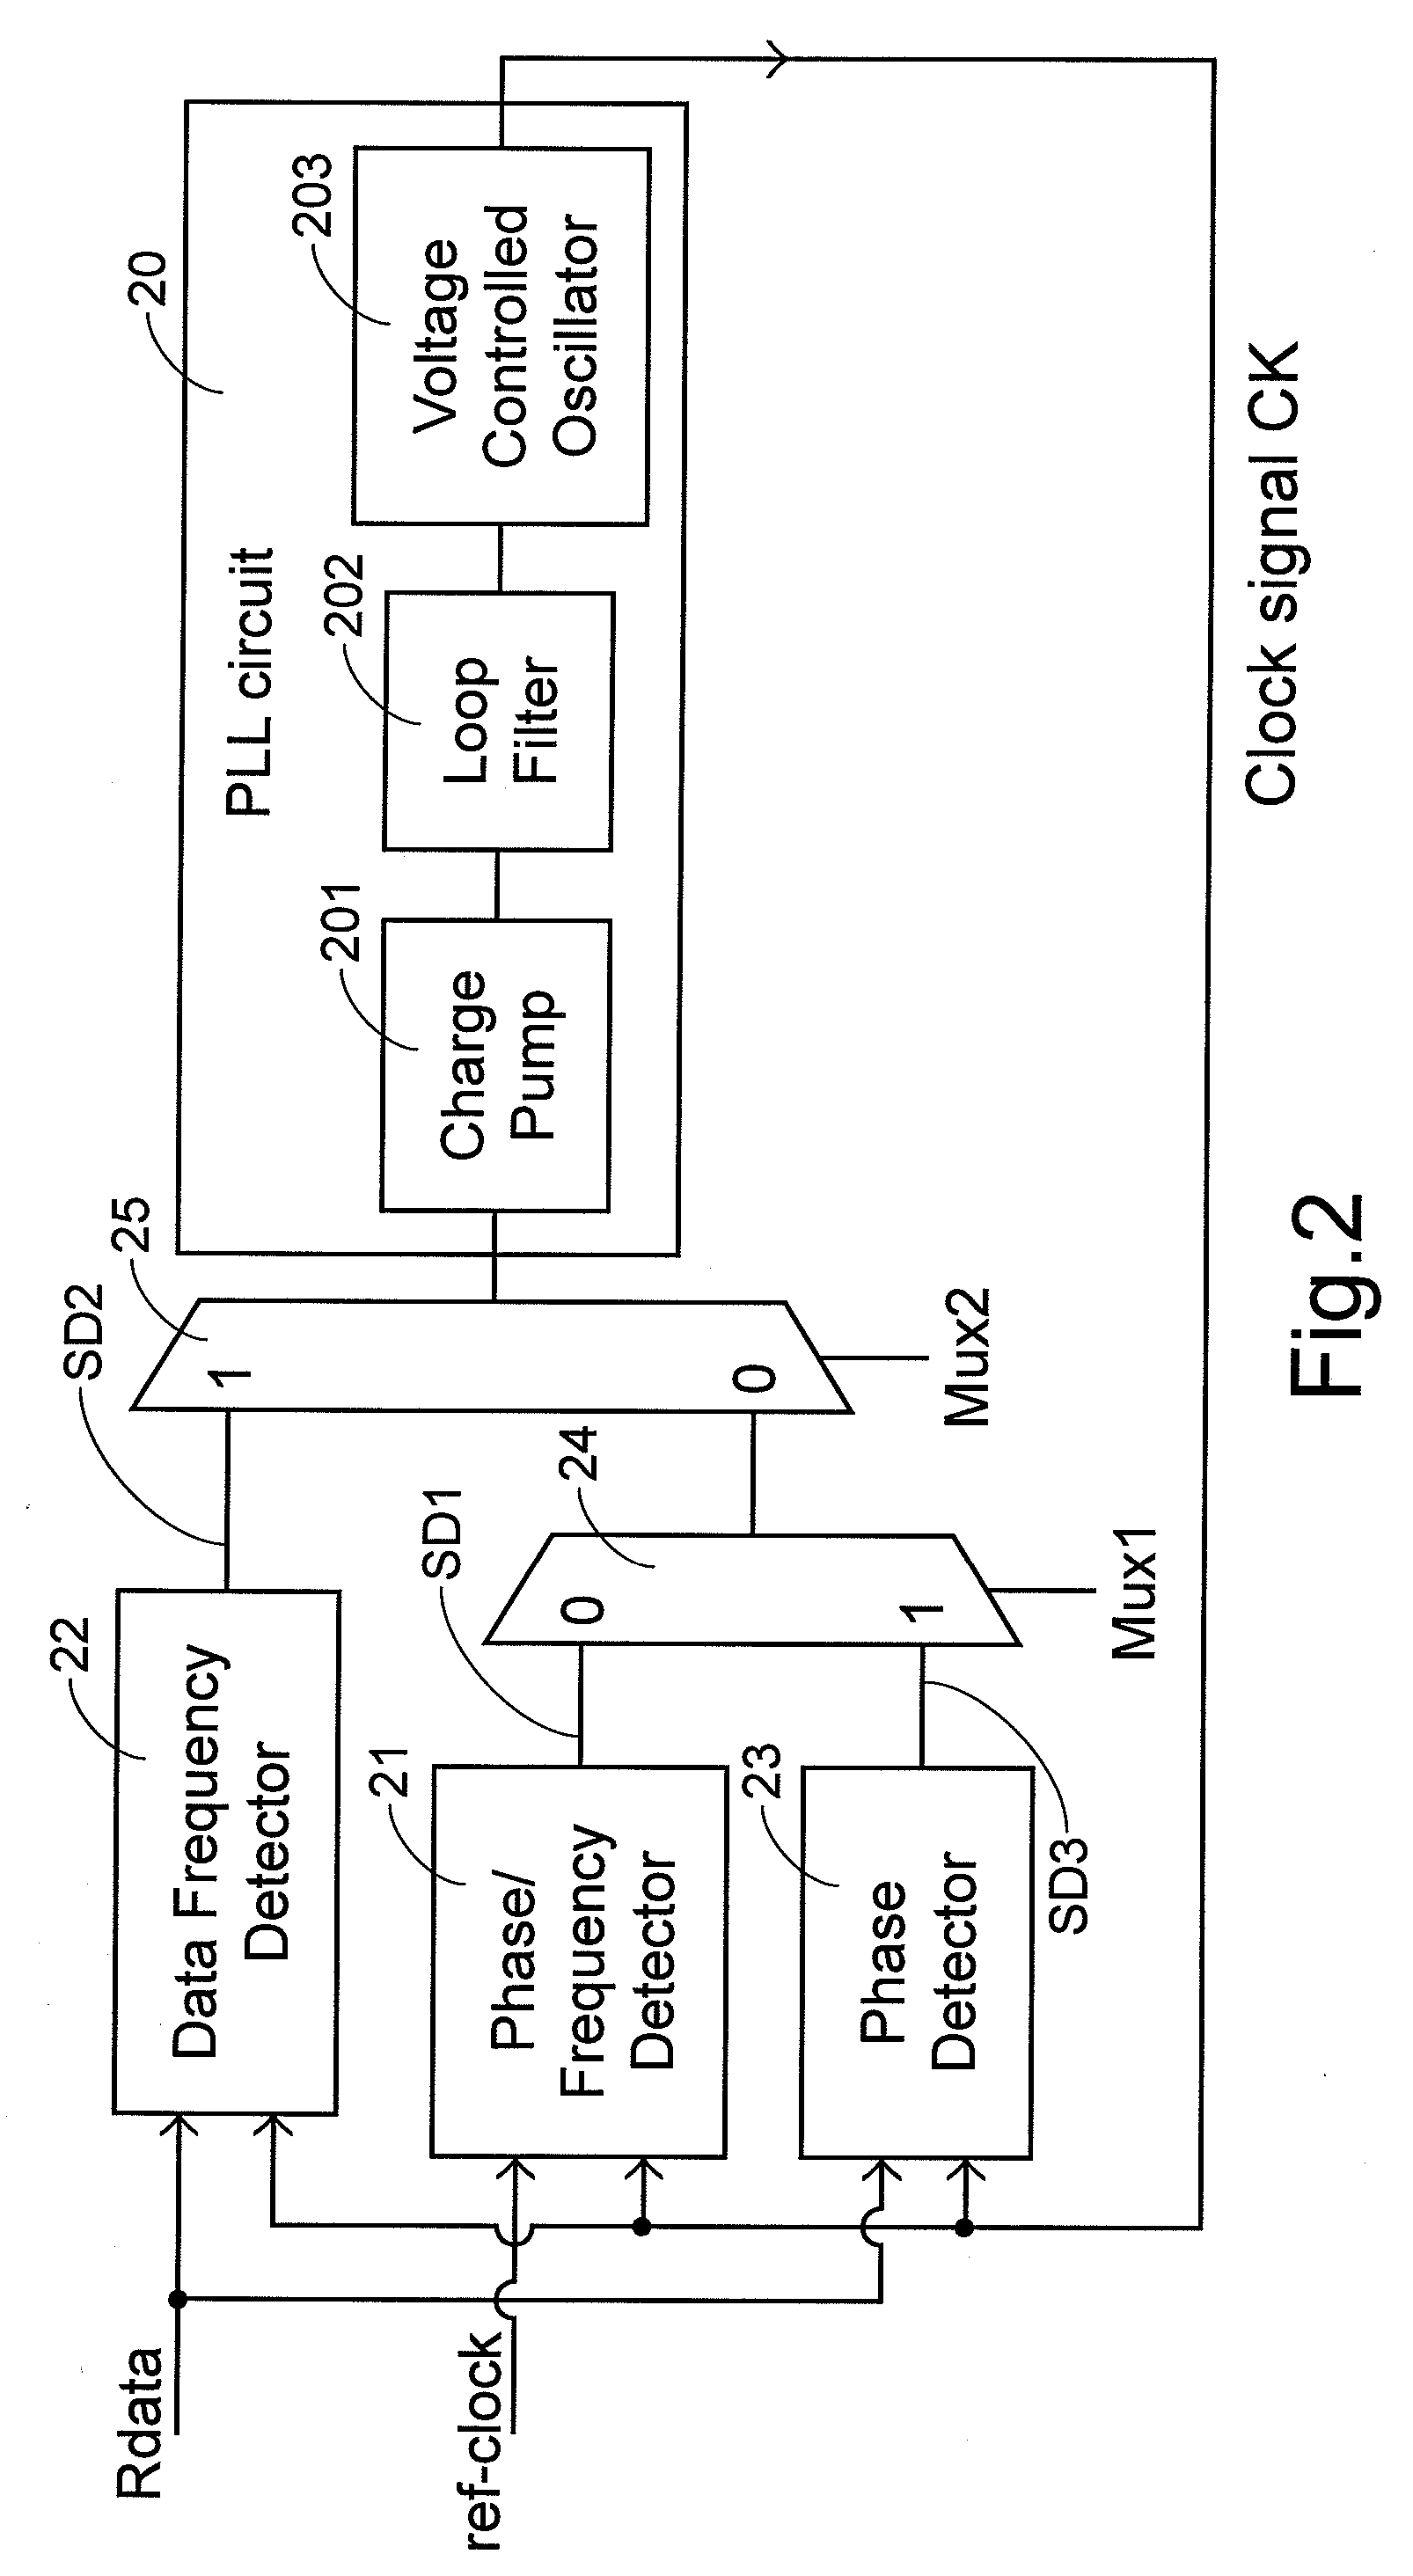 Clock-signal adjusting method and device